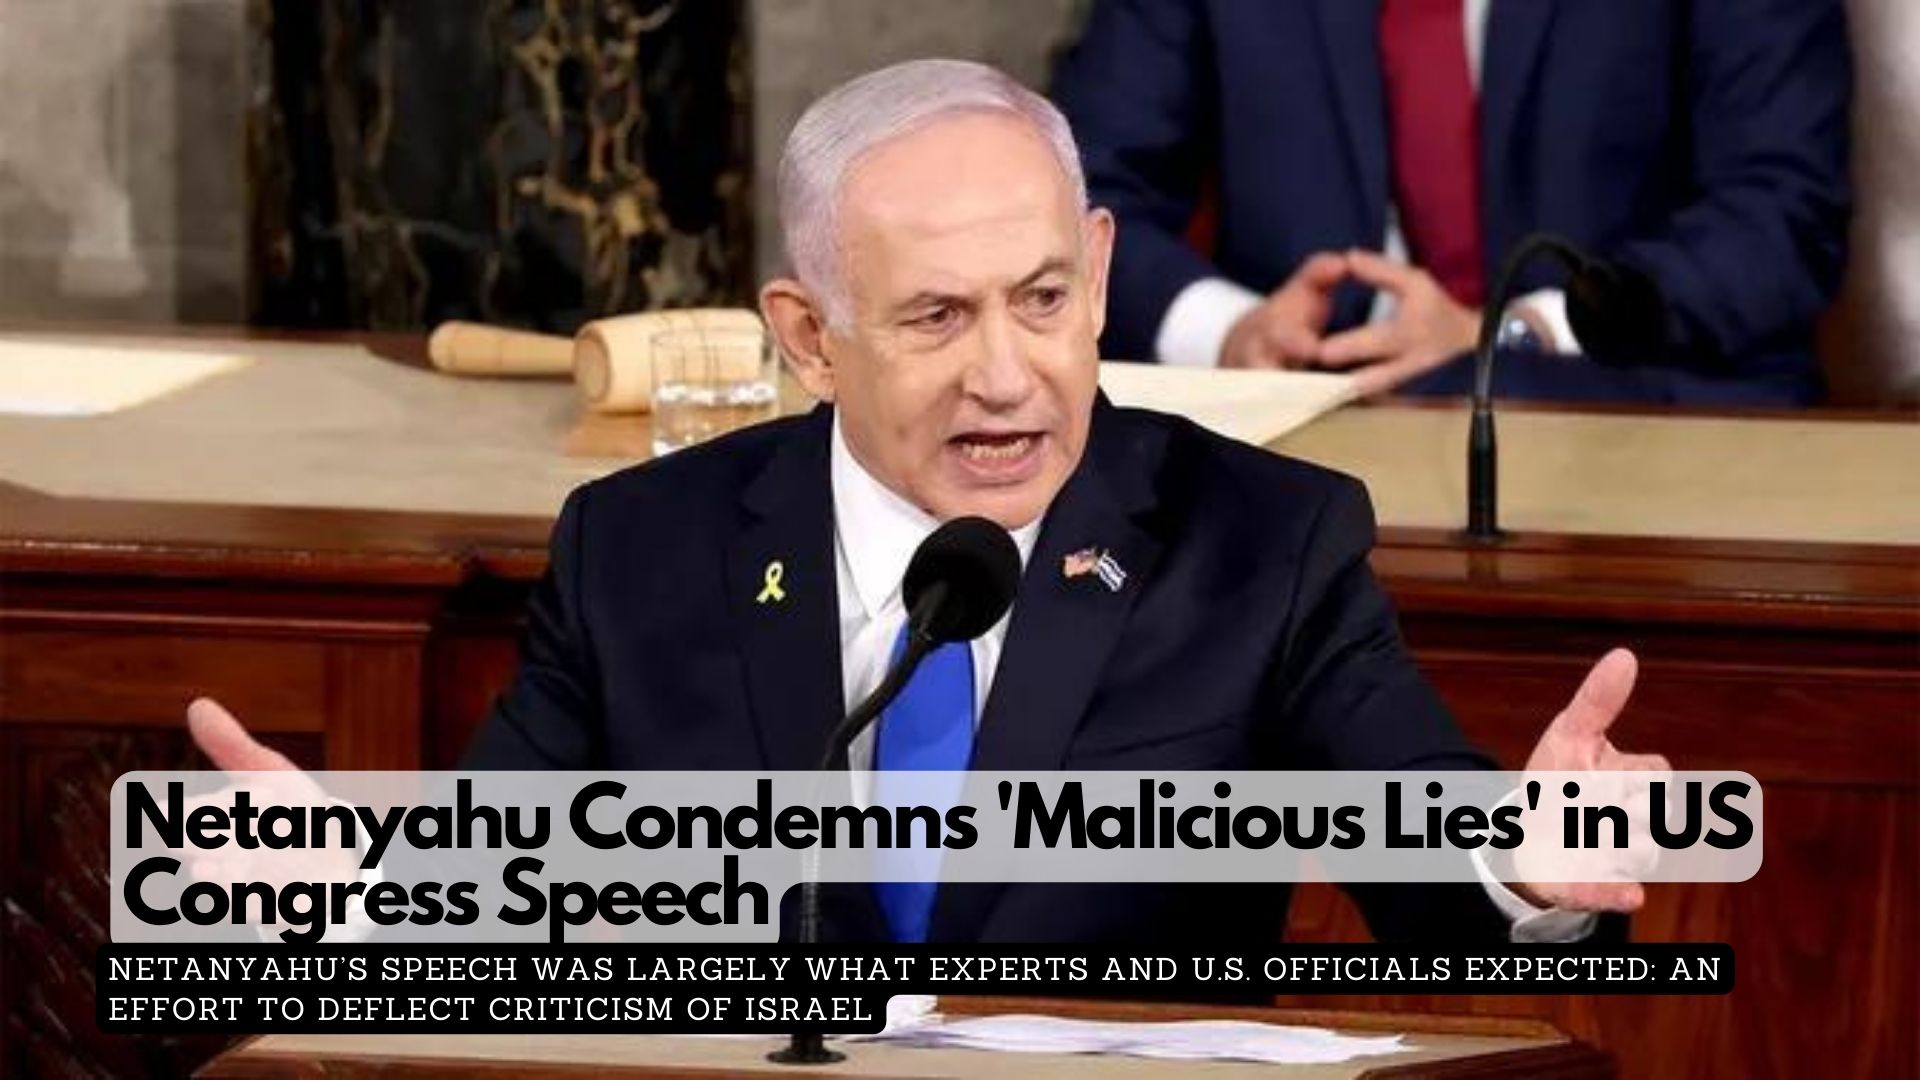 Netanyahu Condemns 'Malicious Lies' in US Congress Speech